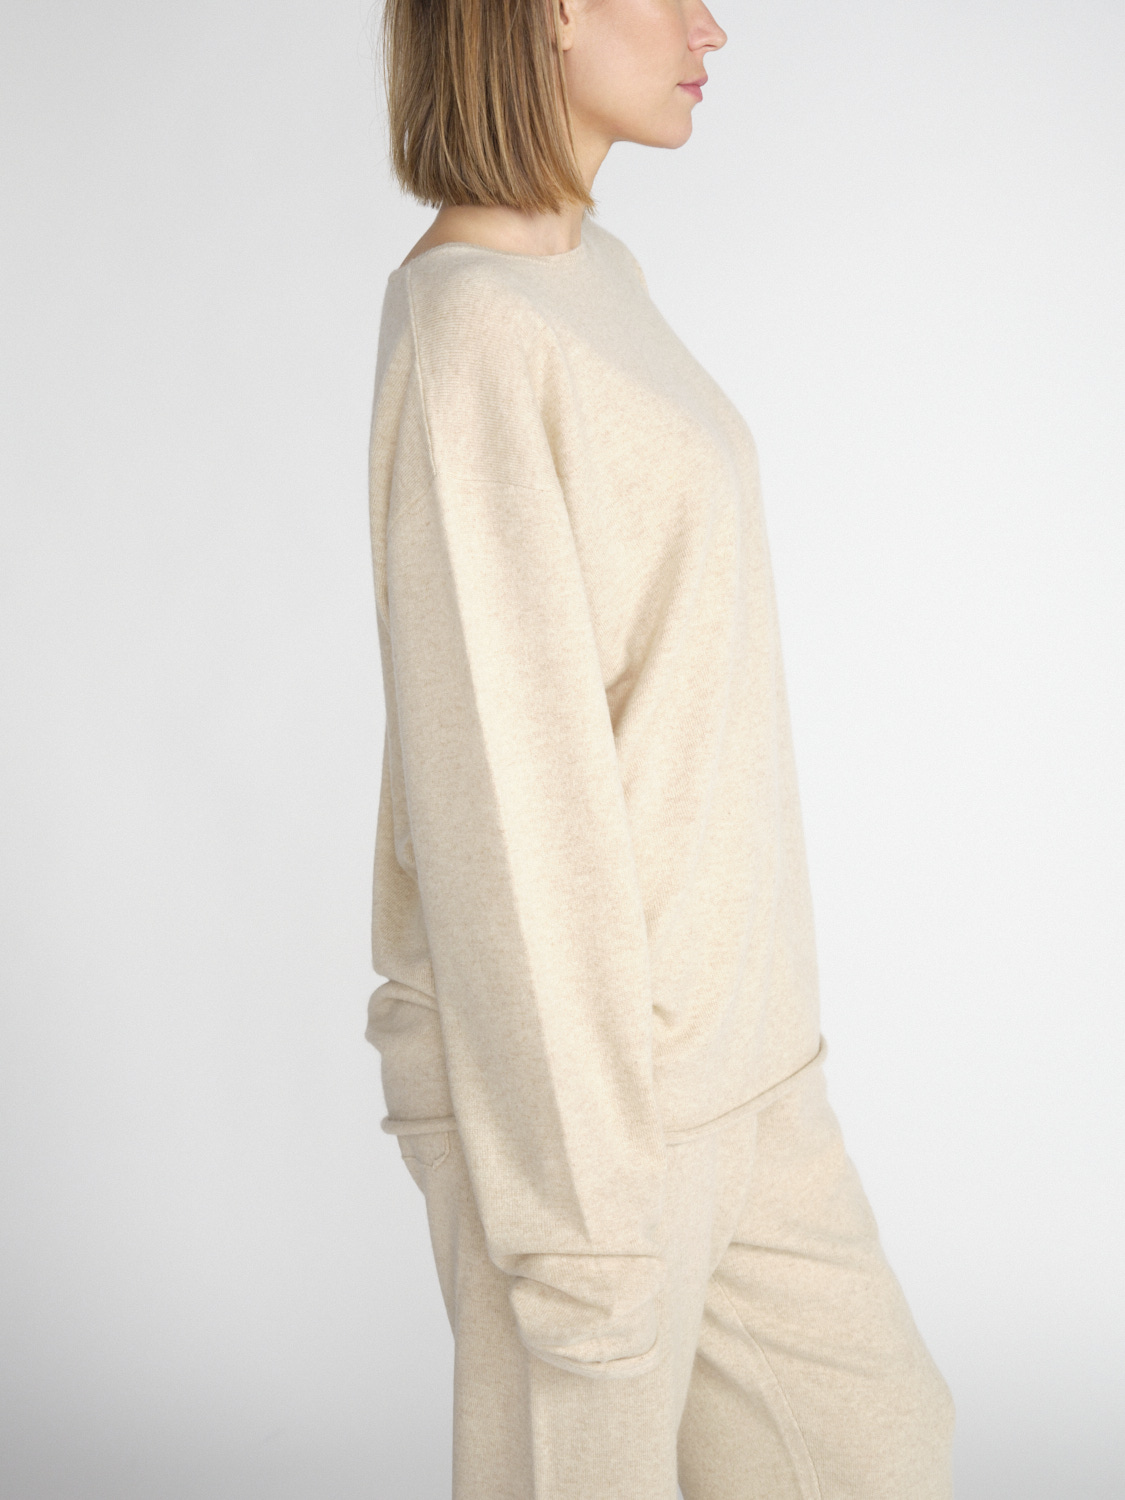 Extreme Cashmere N° 314 Piscis - Jersey ligero de cachemira   beige Talla única